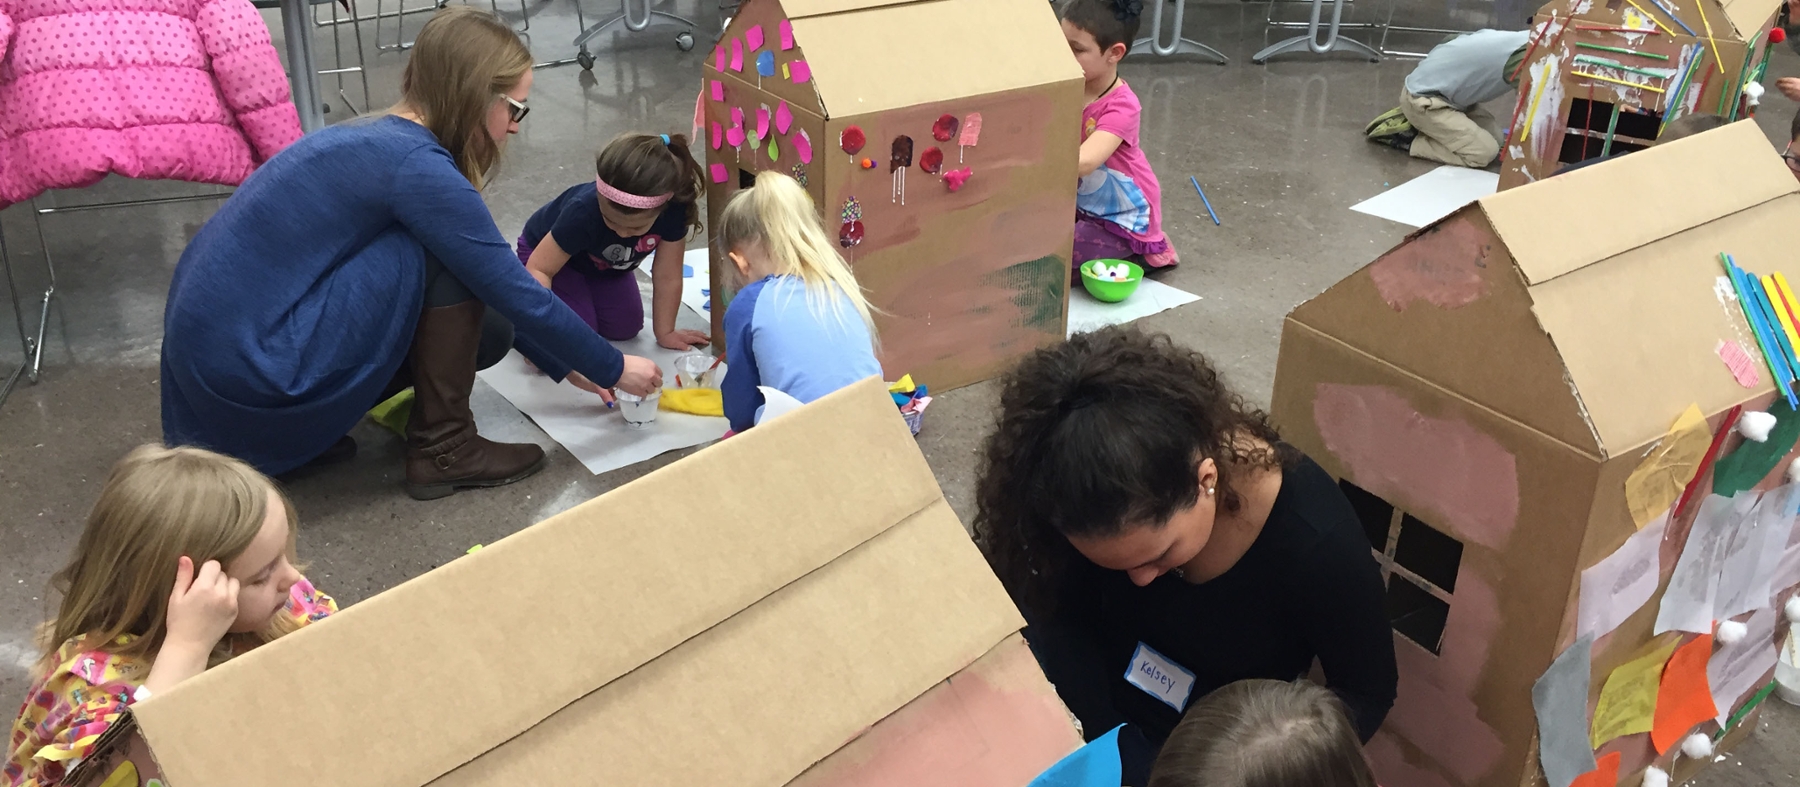 Student teachers and children paint cardboard box houses on the floor